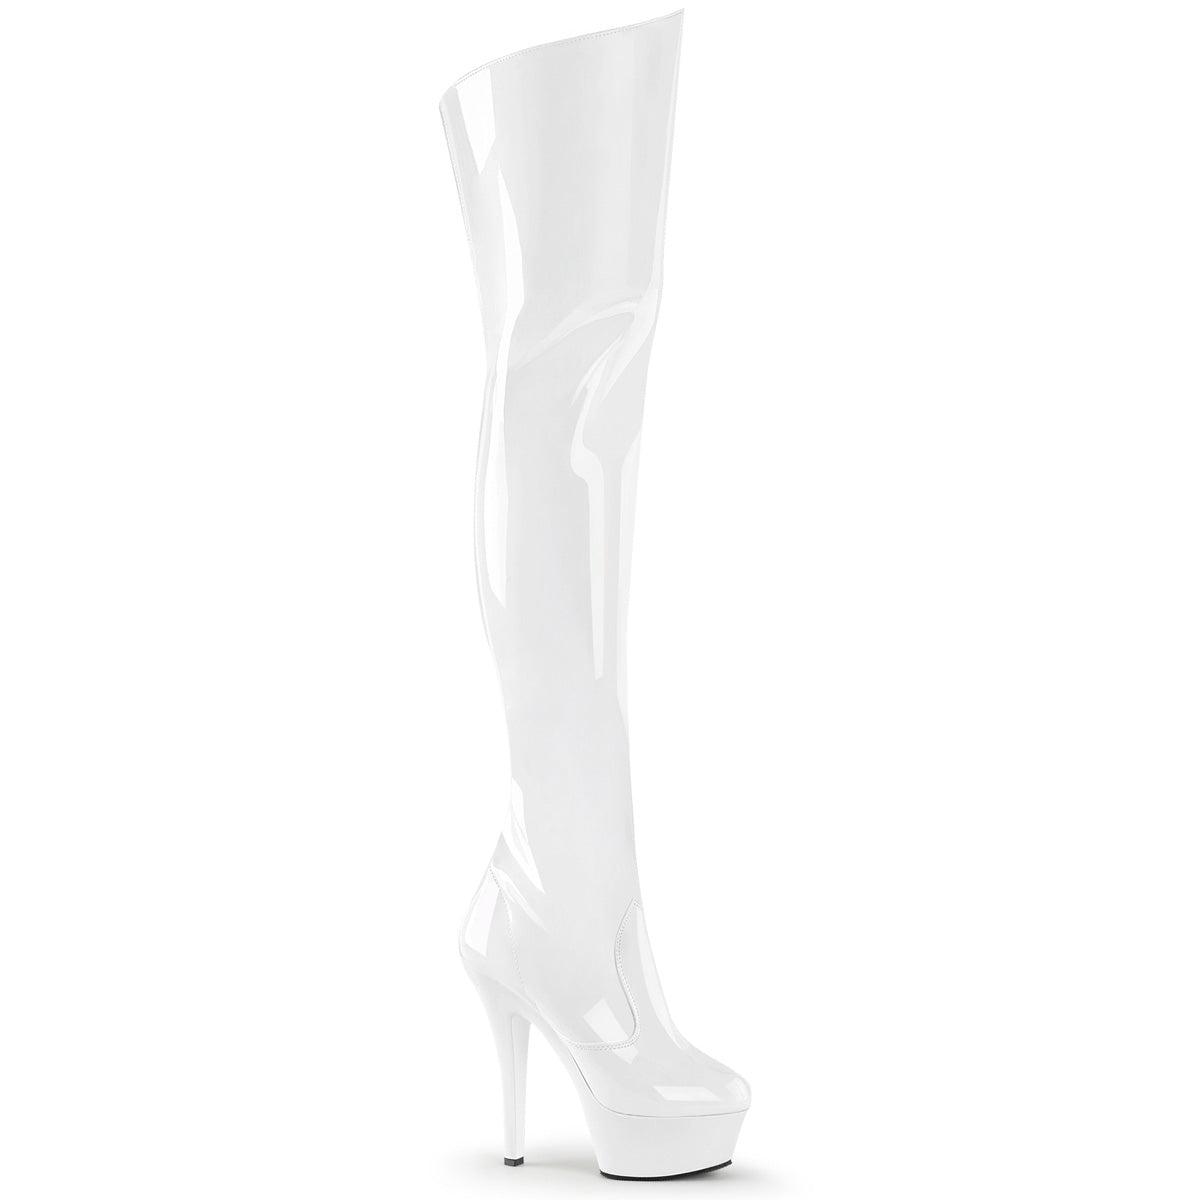 KISS-3010 Pleaser 6" Heel White Patent Stripper Platform Thigh High Boots